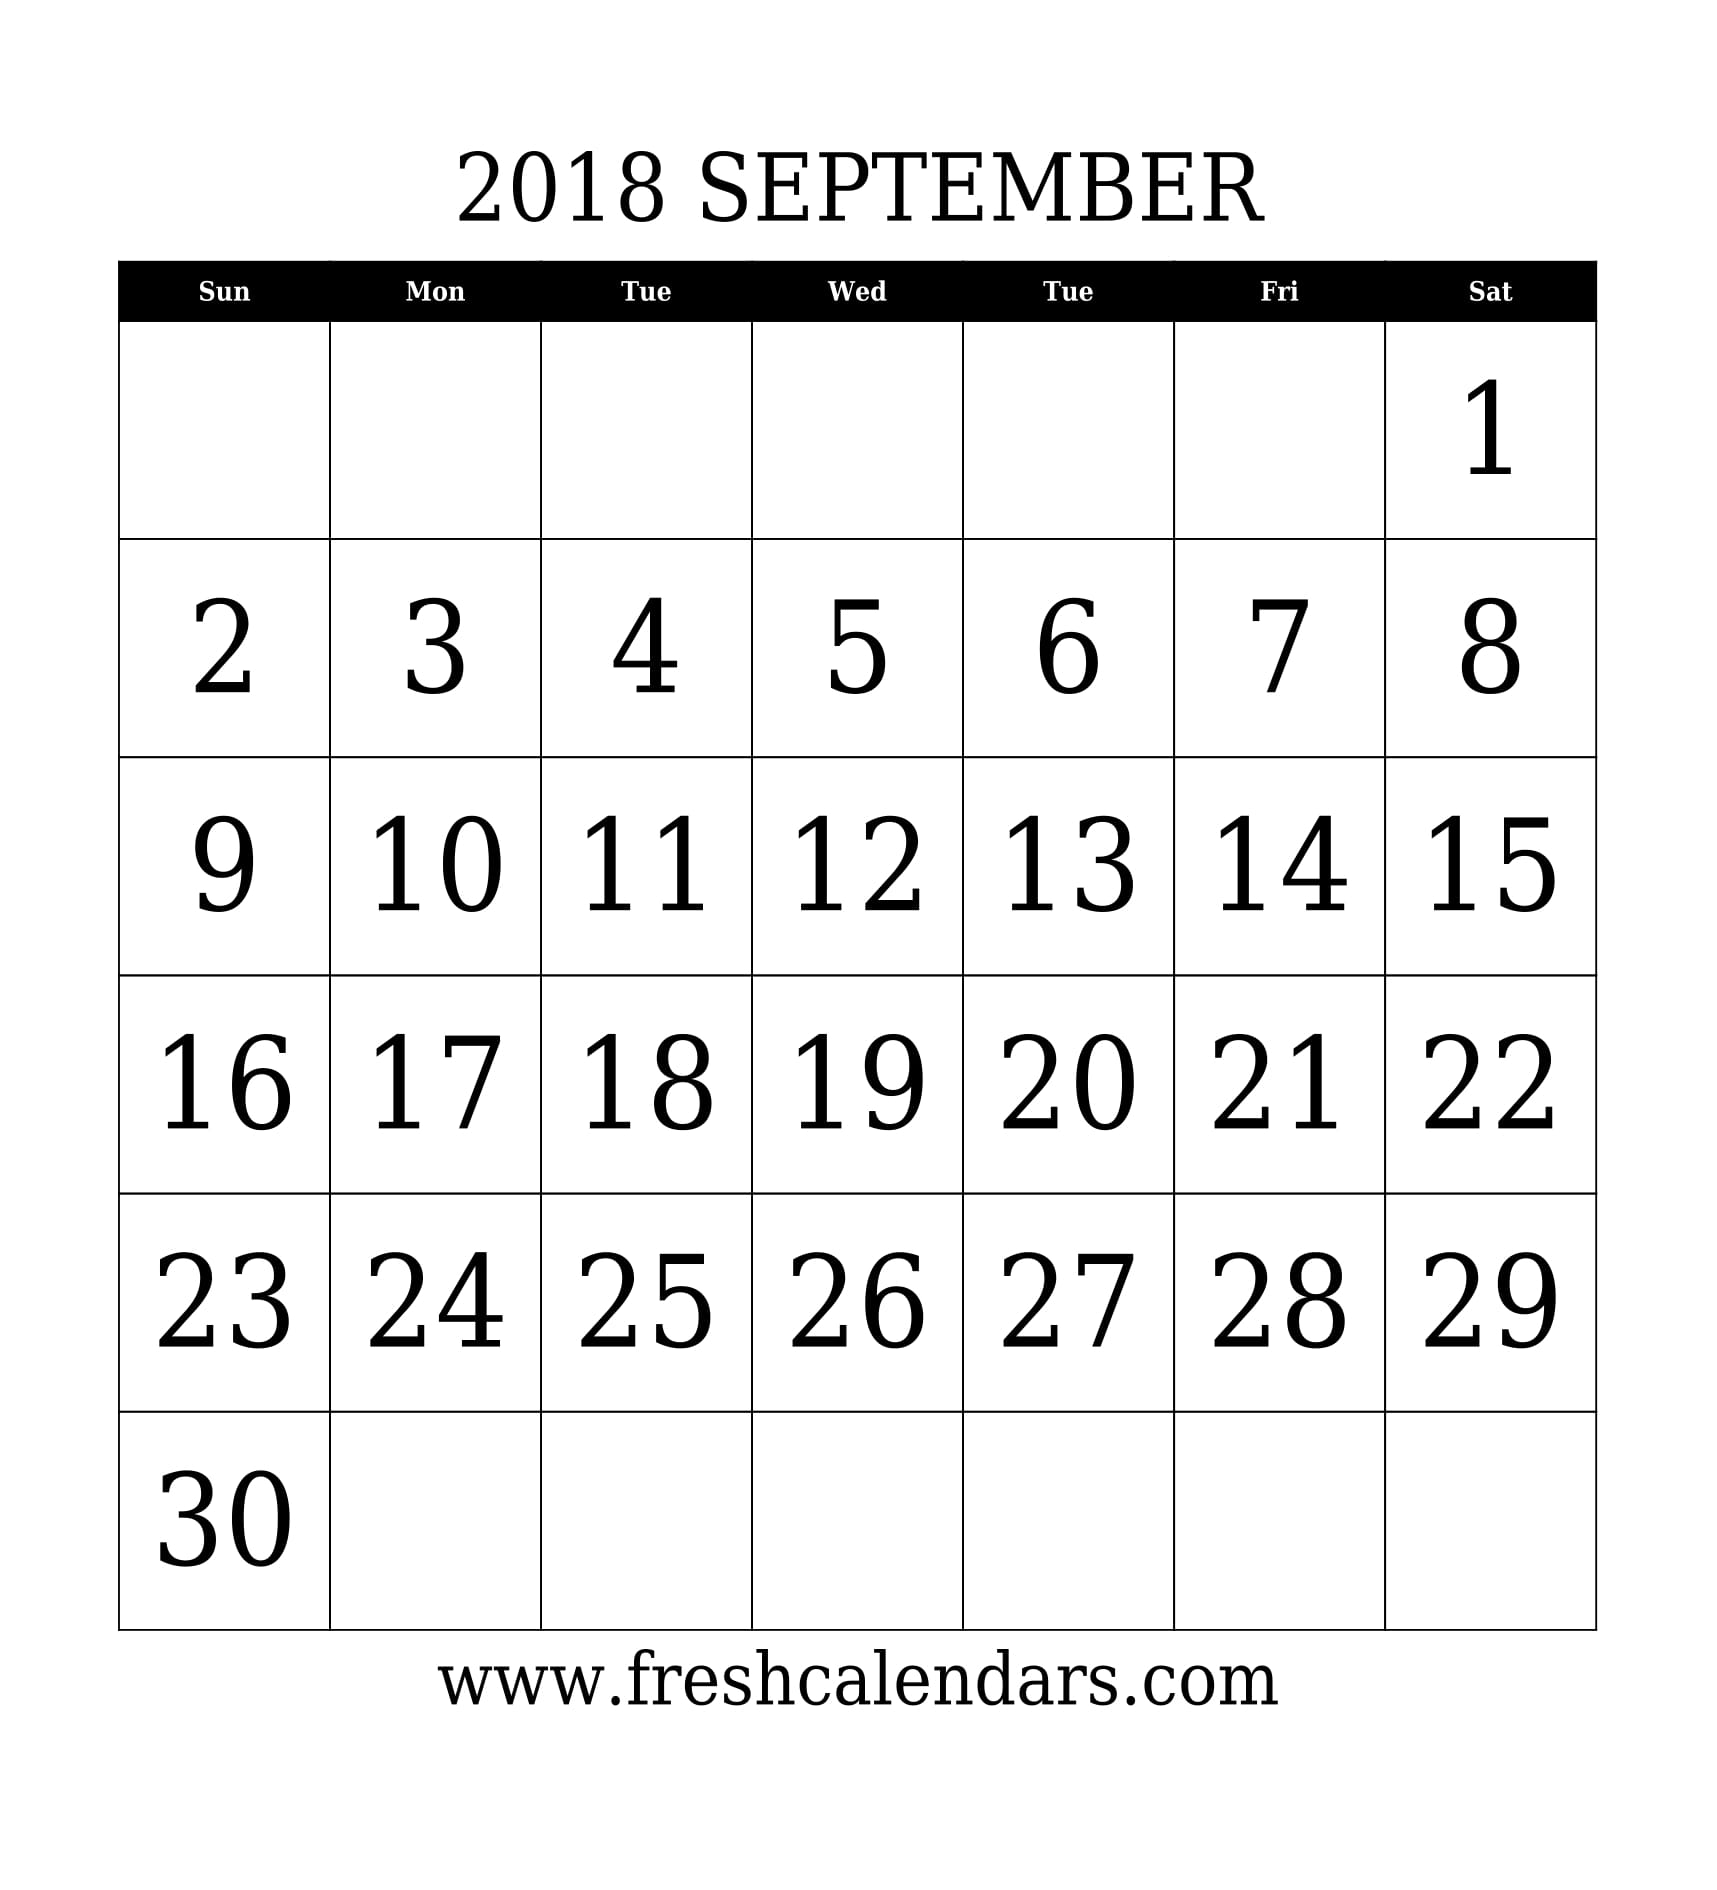 September 2018 Calendar With Large Dates